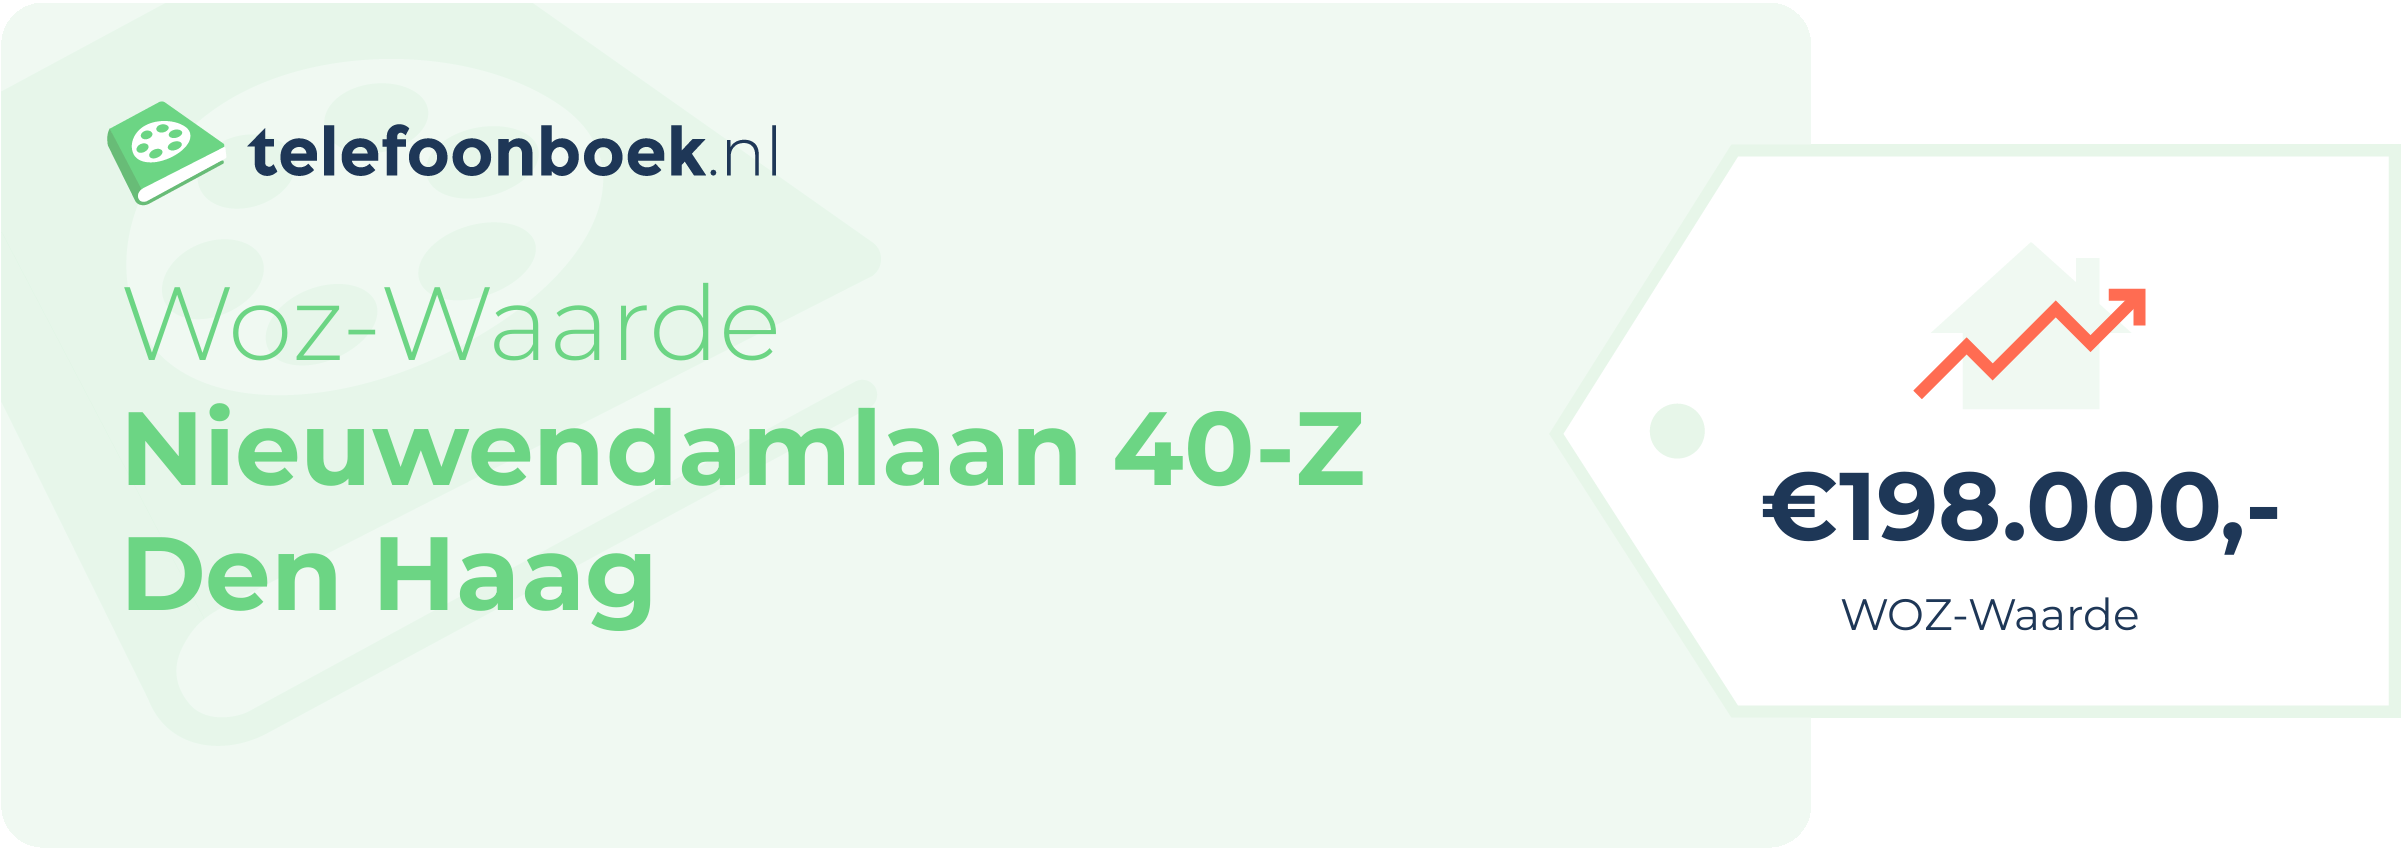 WOZ-waarde Nieuwendamlaan 40-Z Den Haag